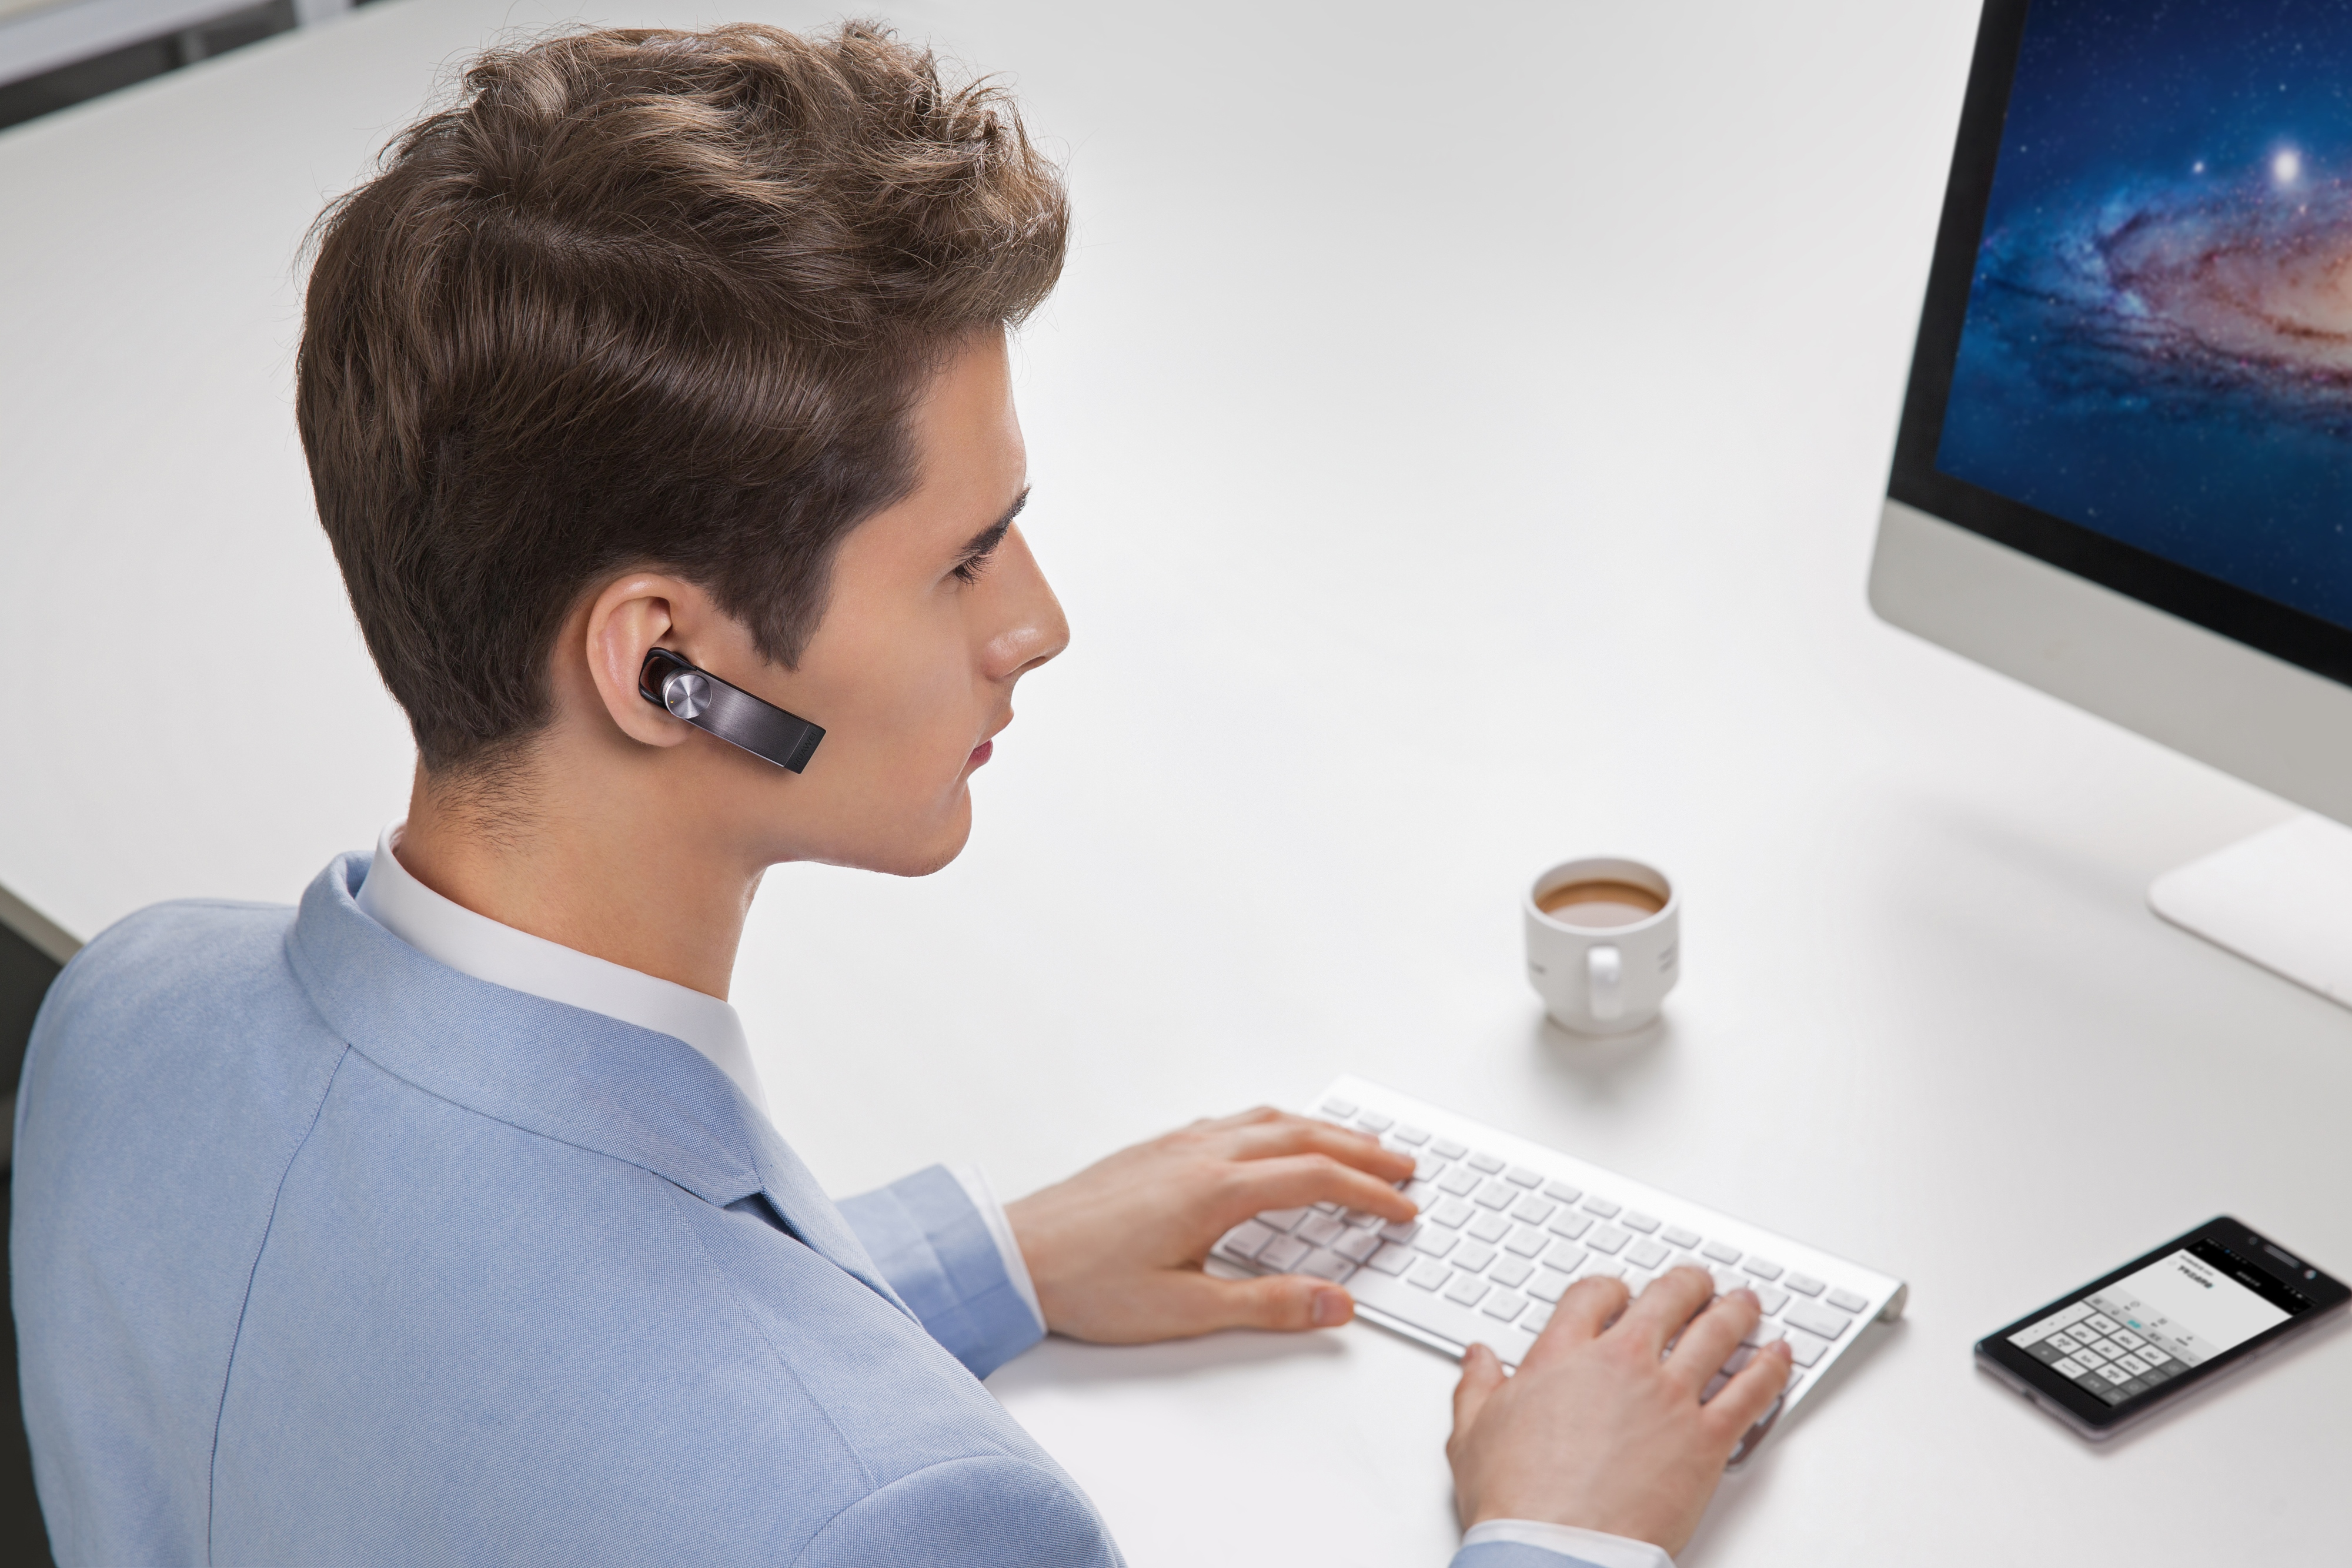 HUAWEI AM07C, In-ear Headset Bluetooth Grau